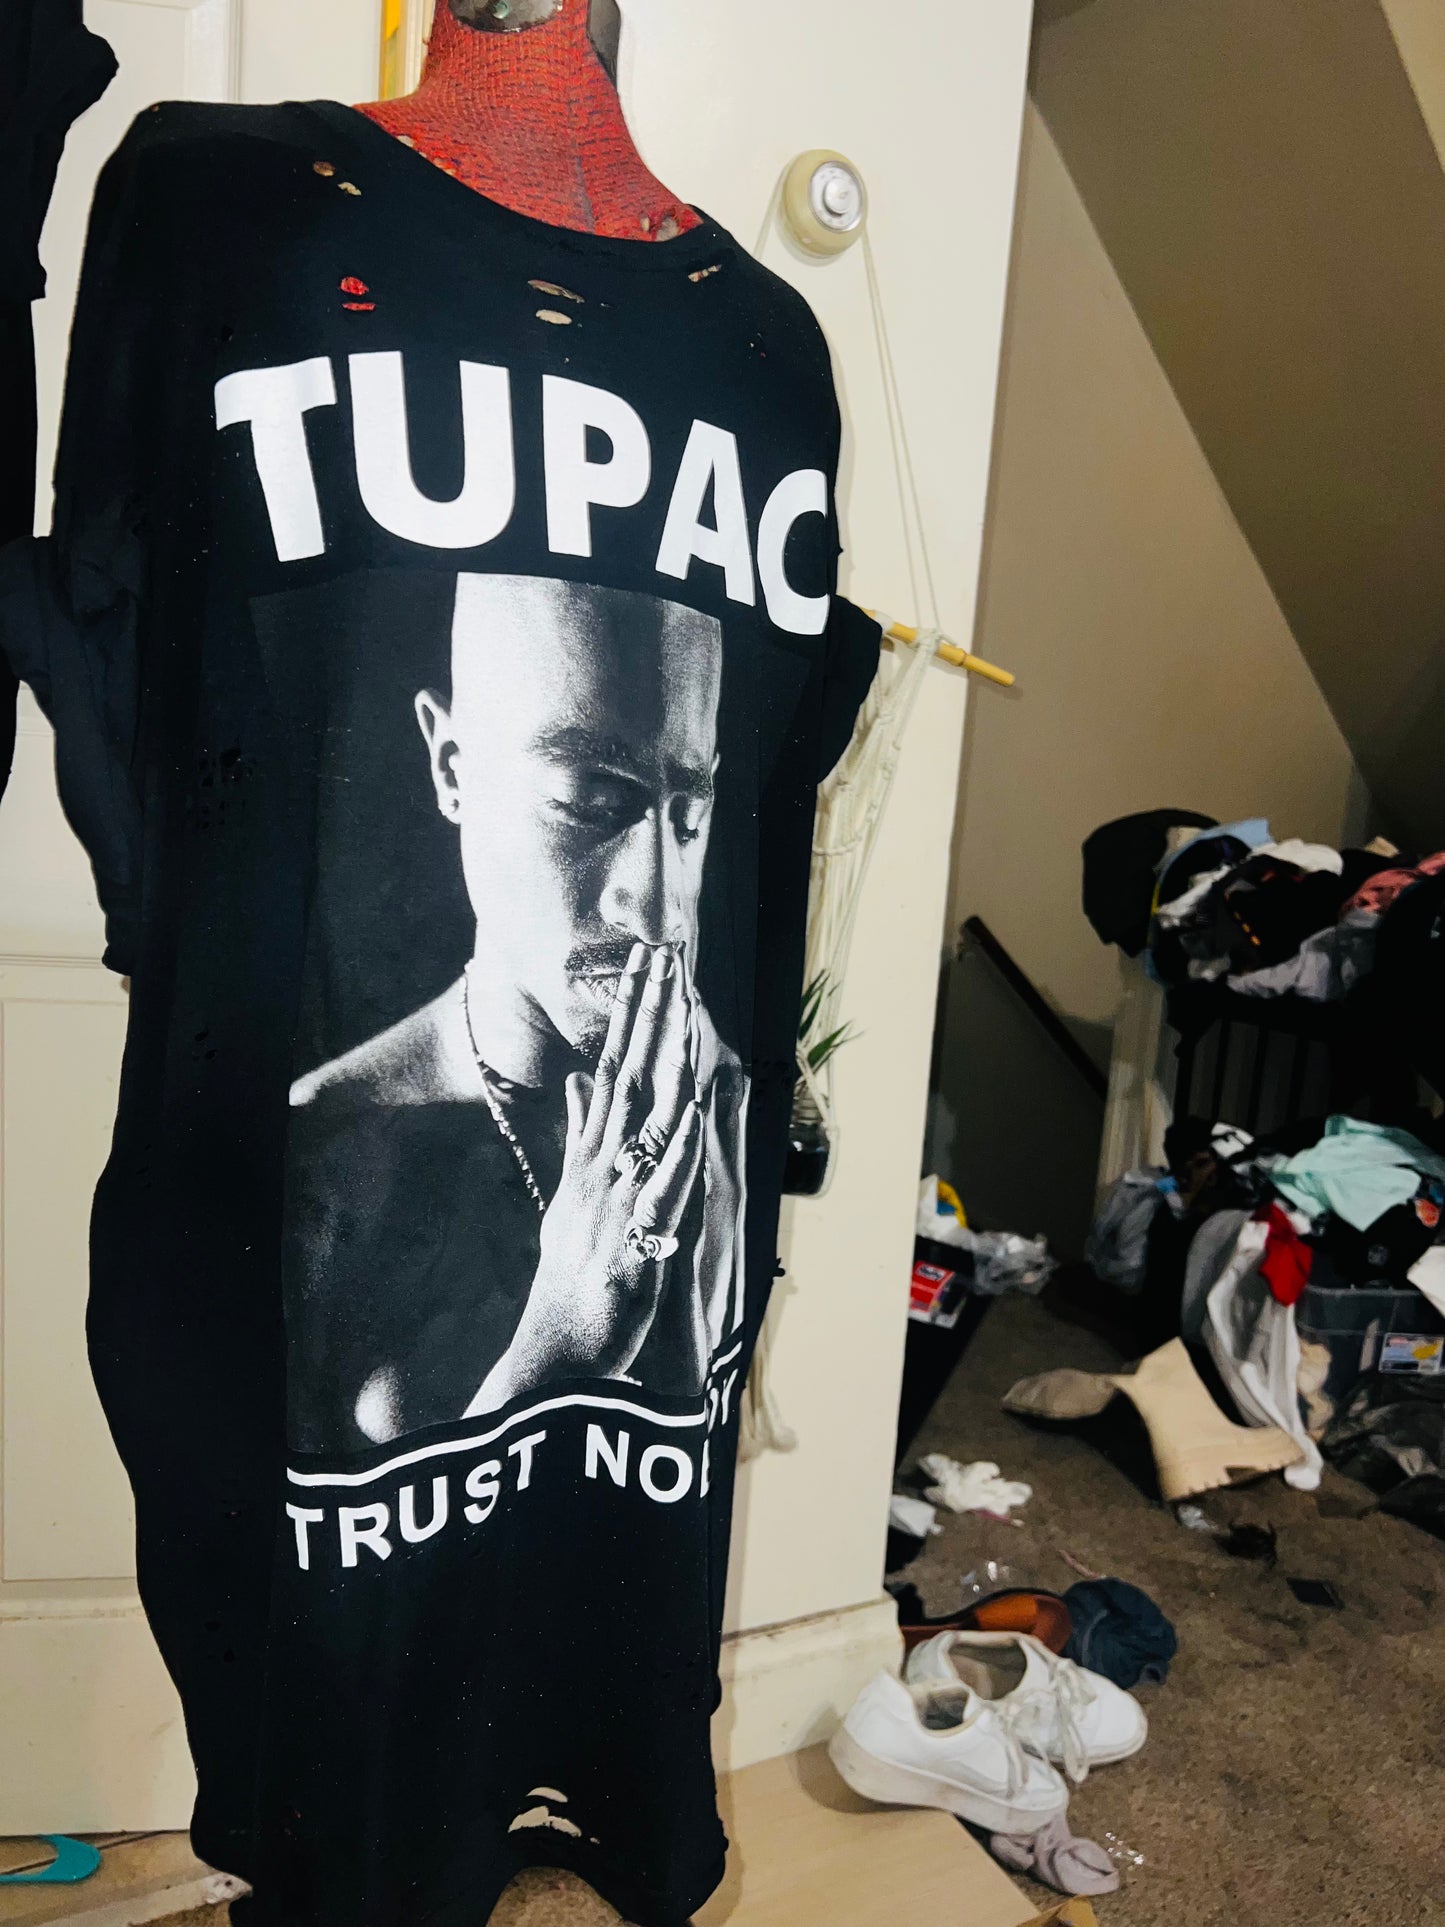 Tupac “Trust Nobody” Oversized Distressed Tee